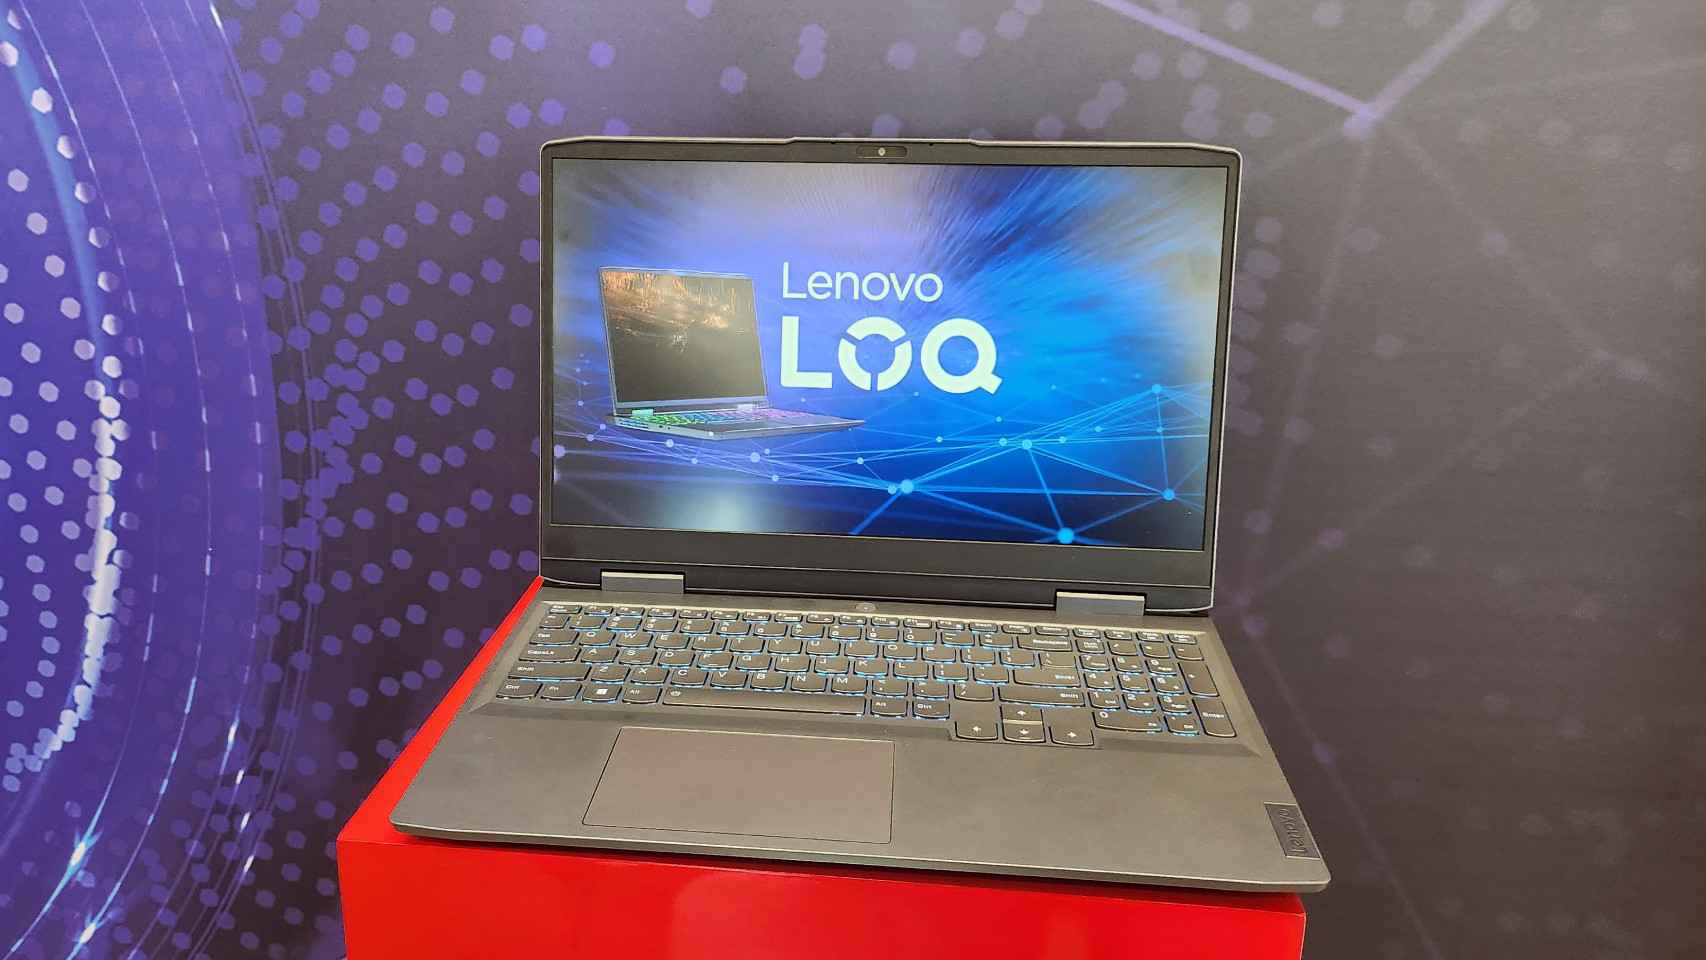 El portátil Lenovo LOQ.